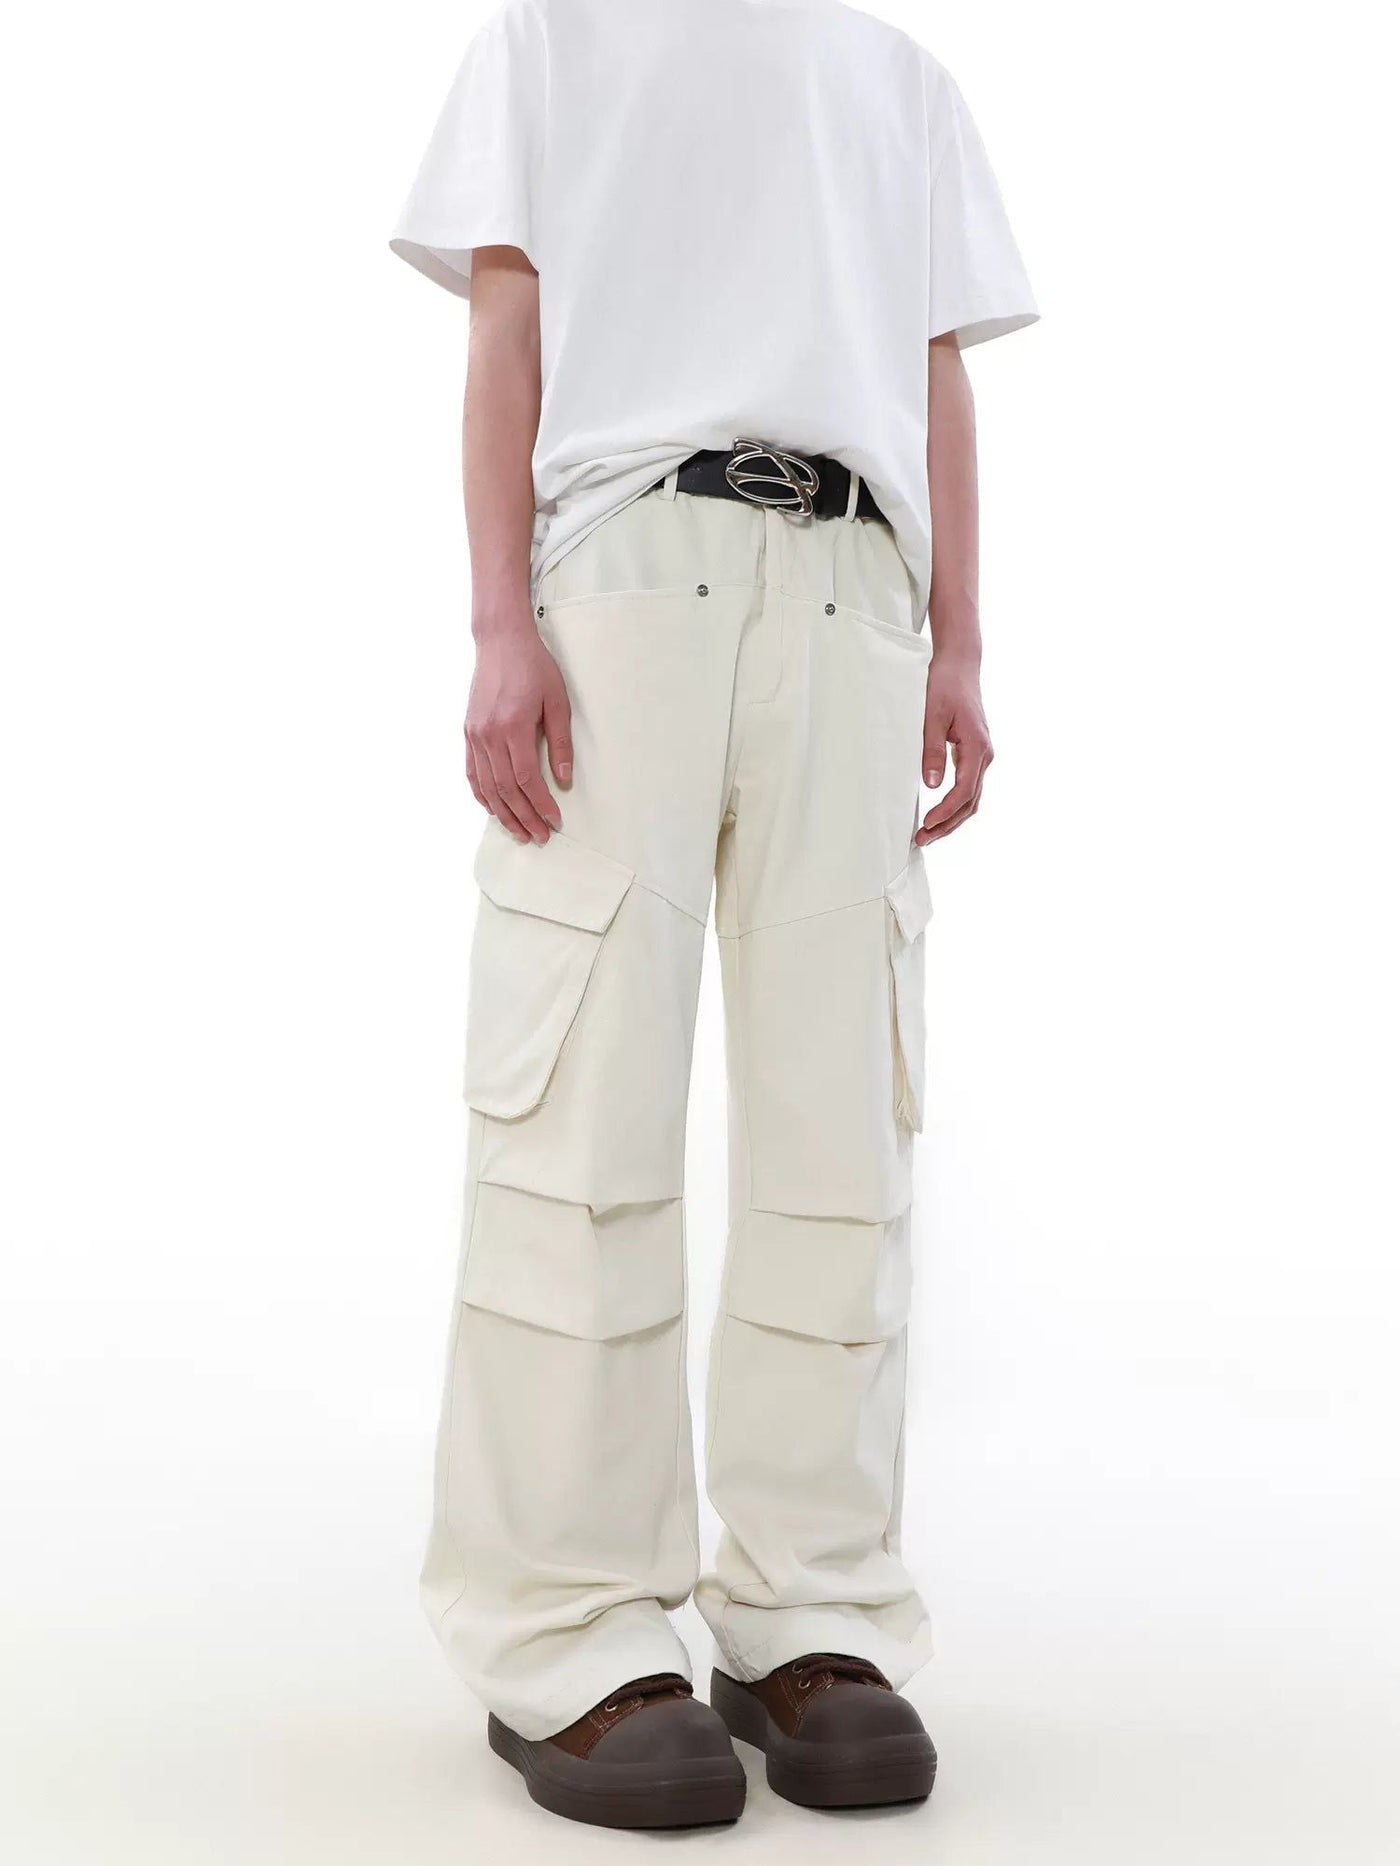 Tilted Pocket Versatile Pants Korean Street Fashion Pants By Mr Nearly Shop Online at OH Vault